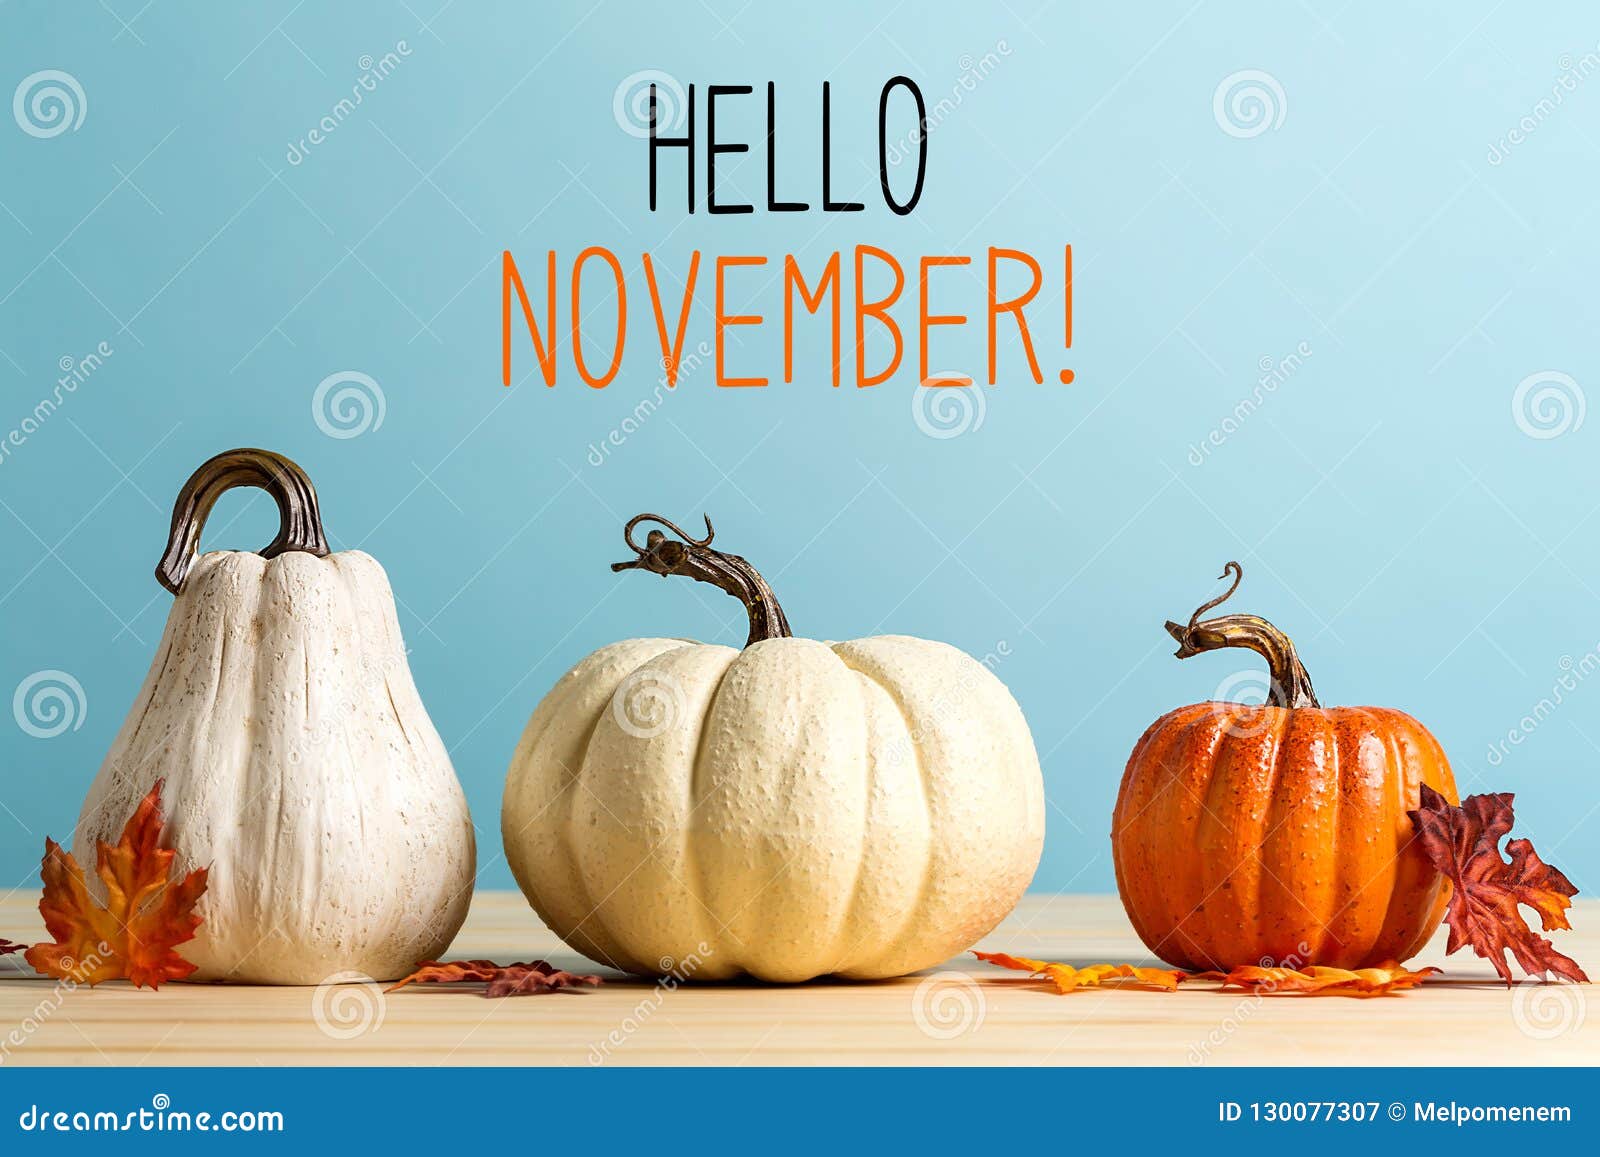 hello november message with pumpkins